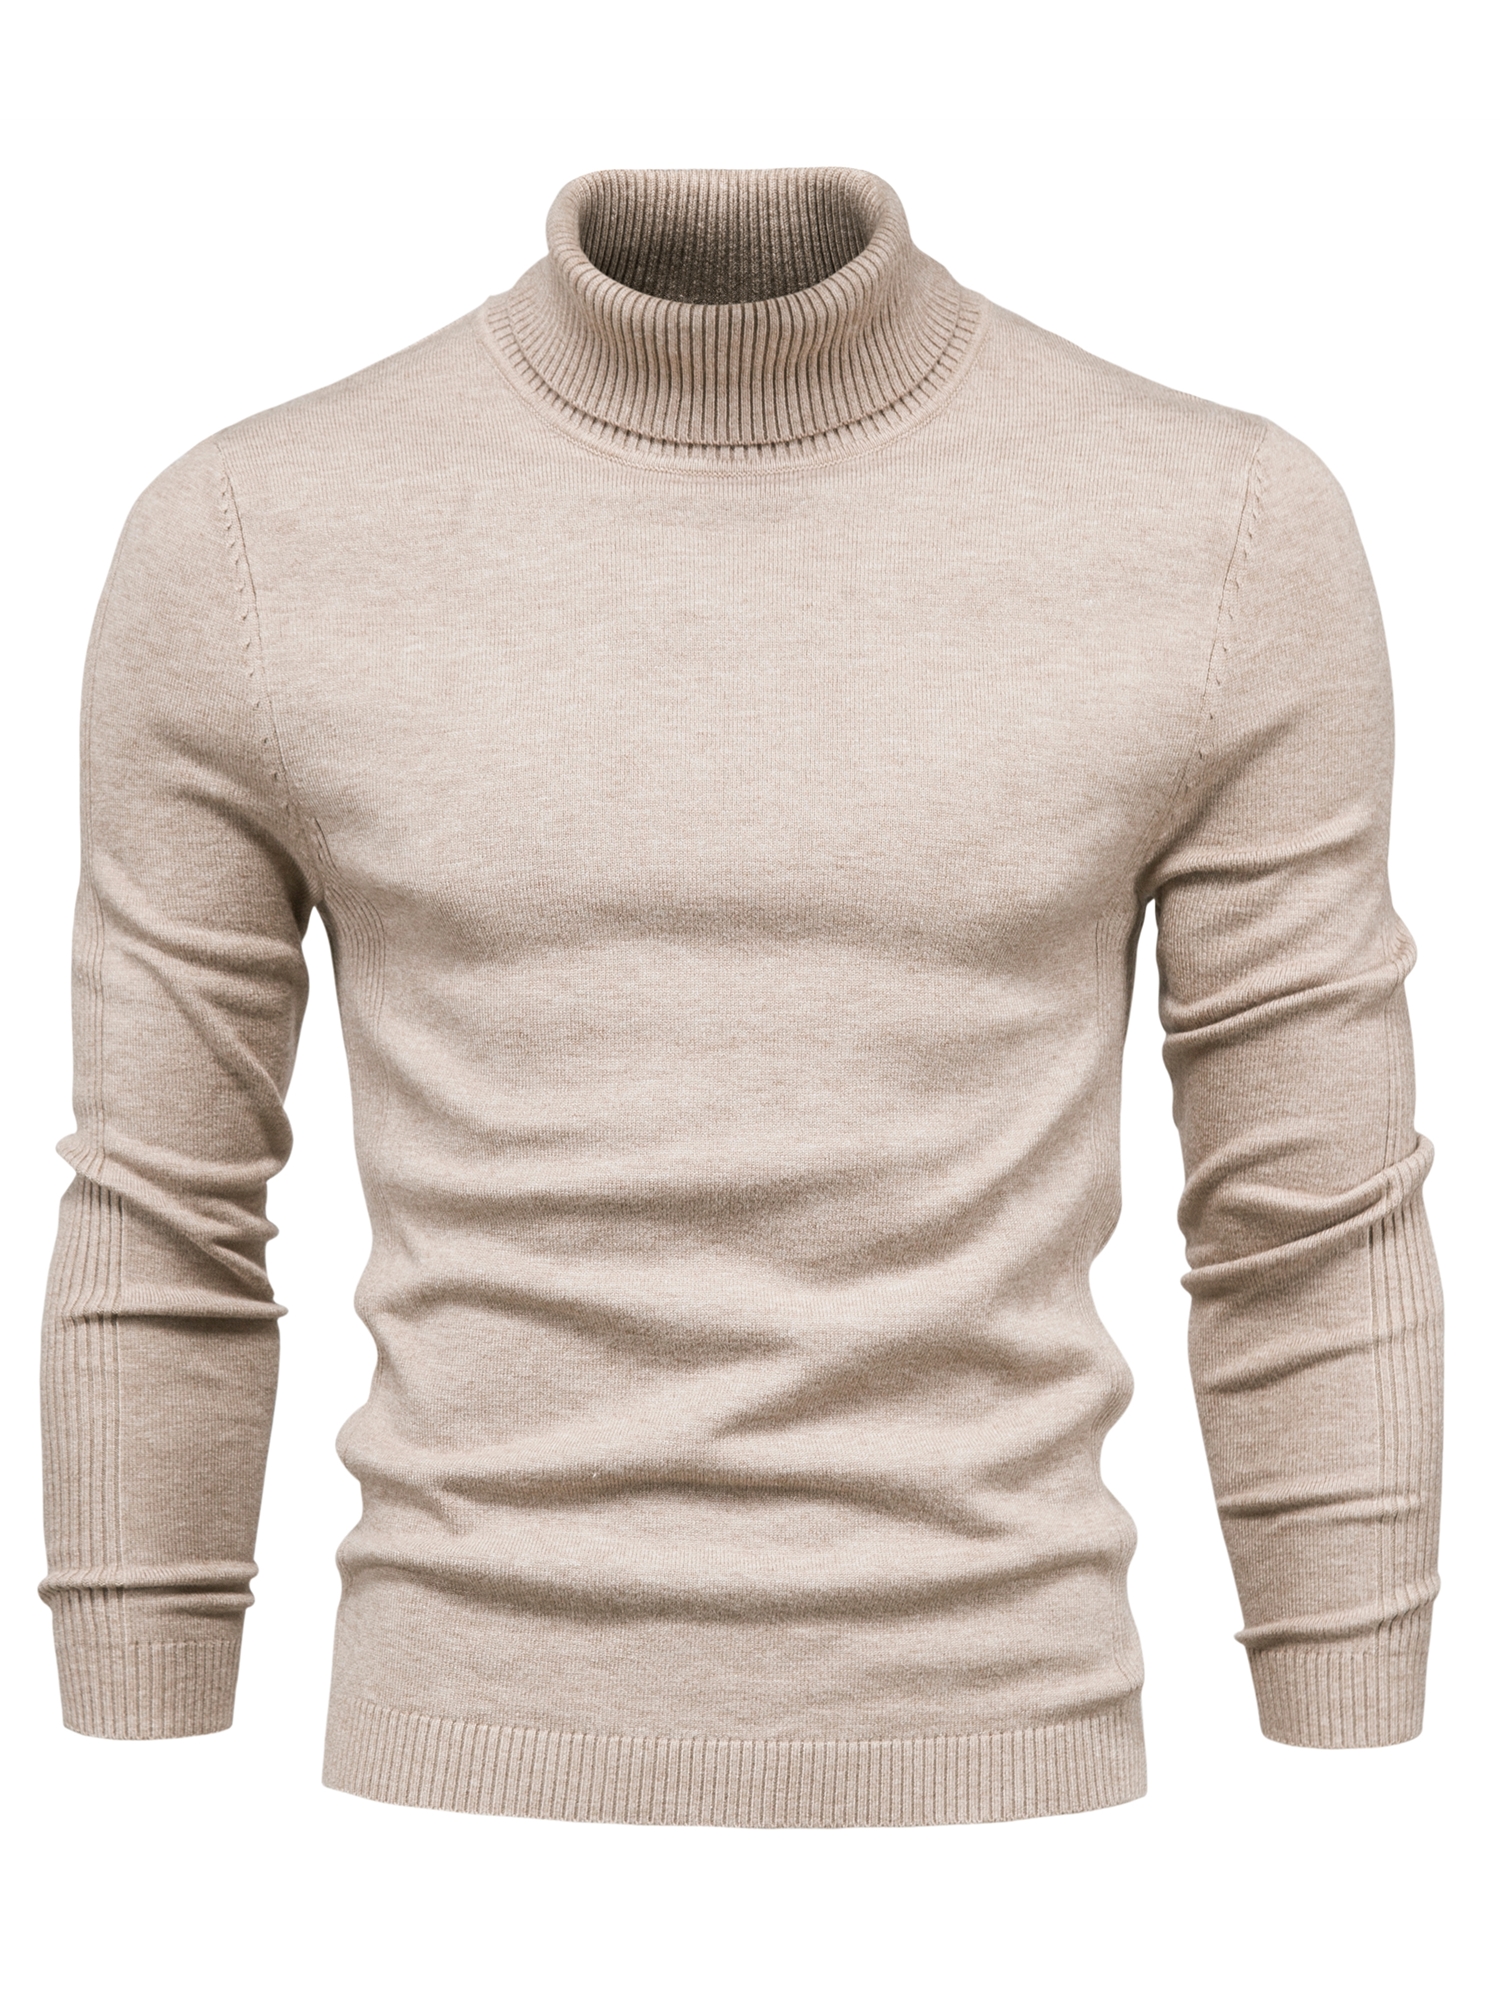 2021 Autumn Winter New Men's Soft Fur Turtleneck Sweater pullovers